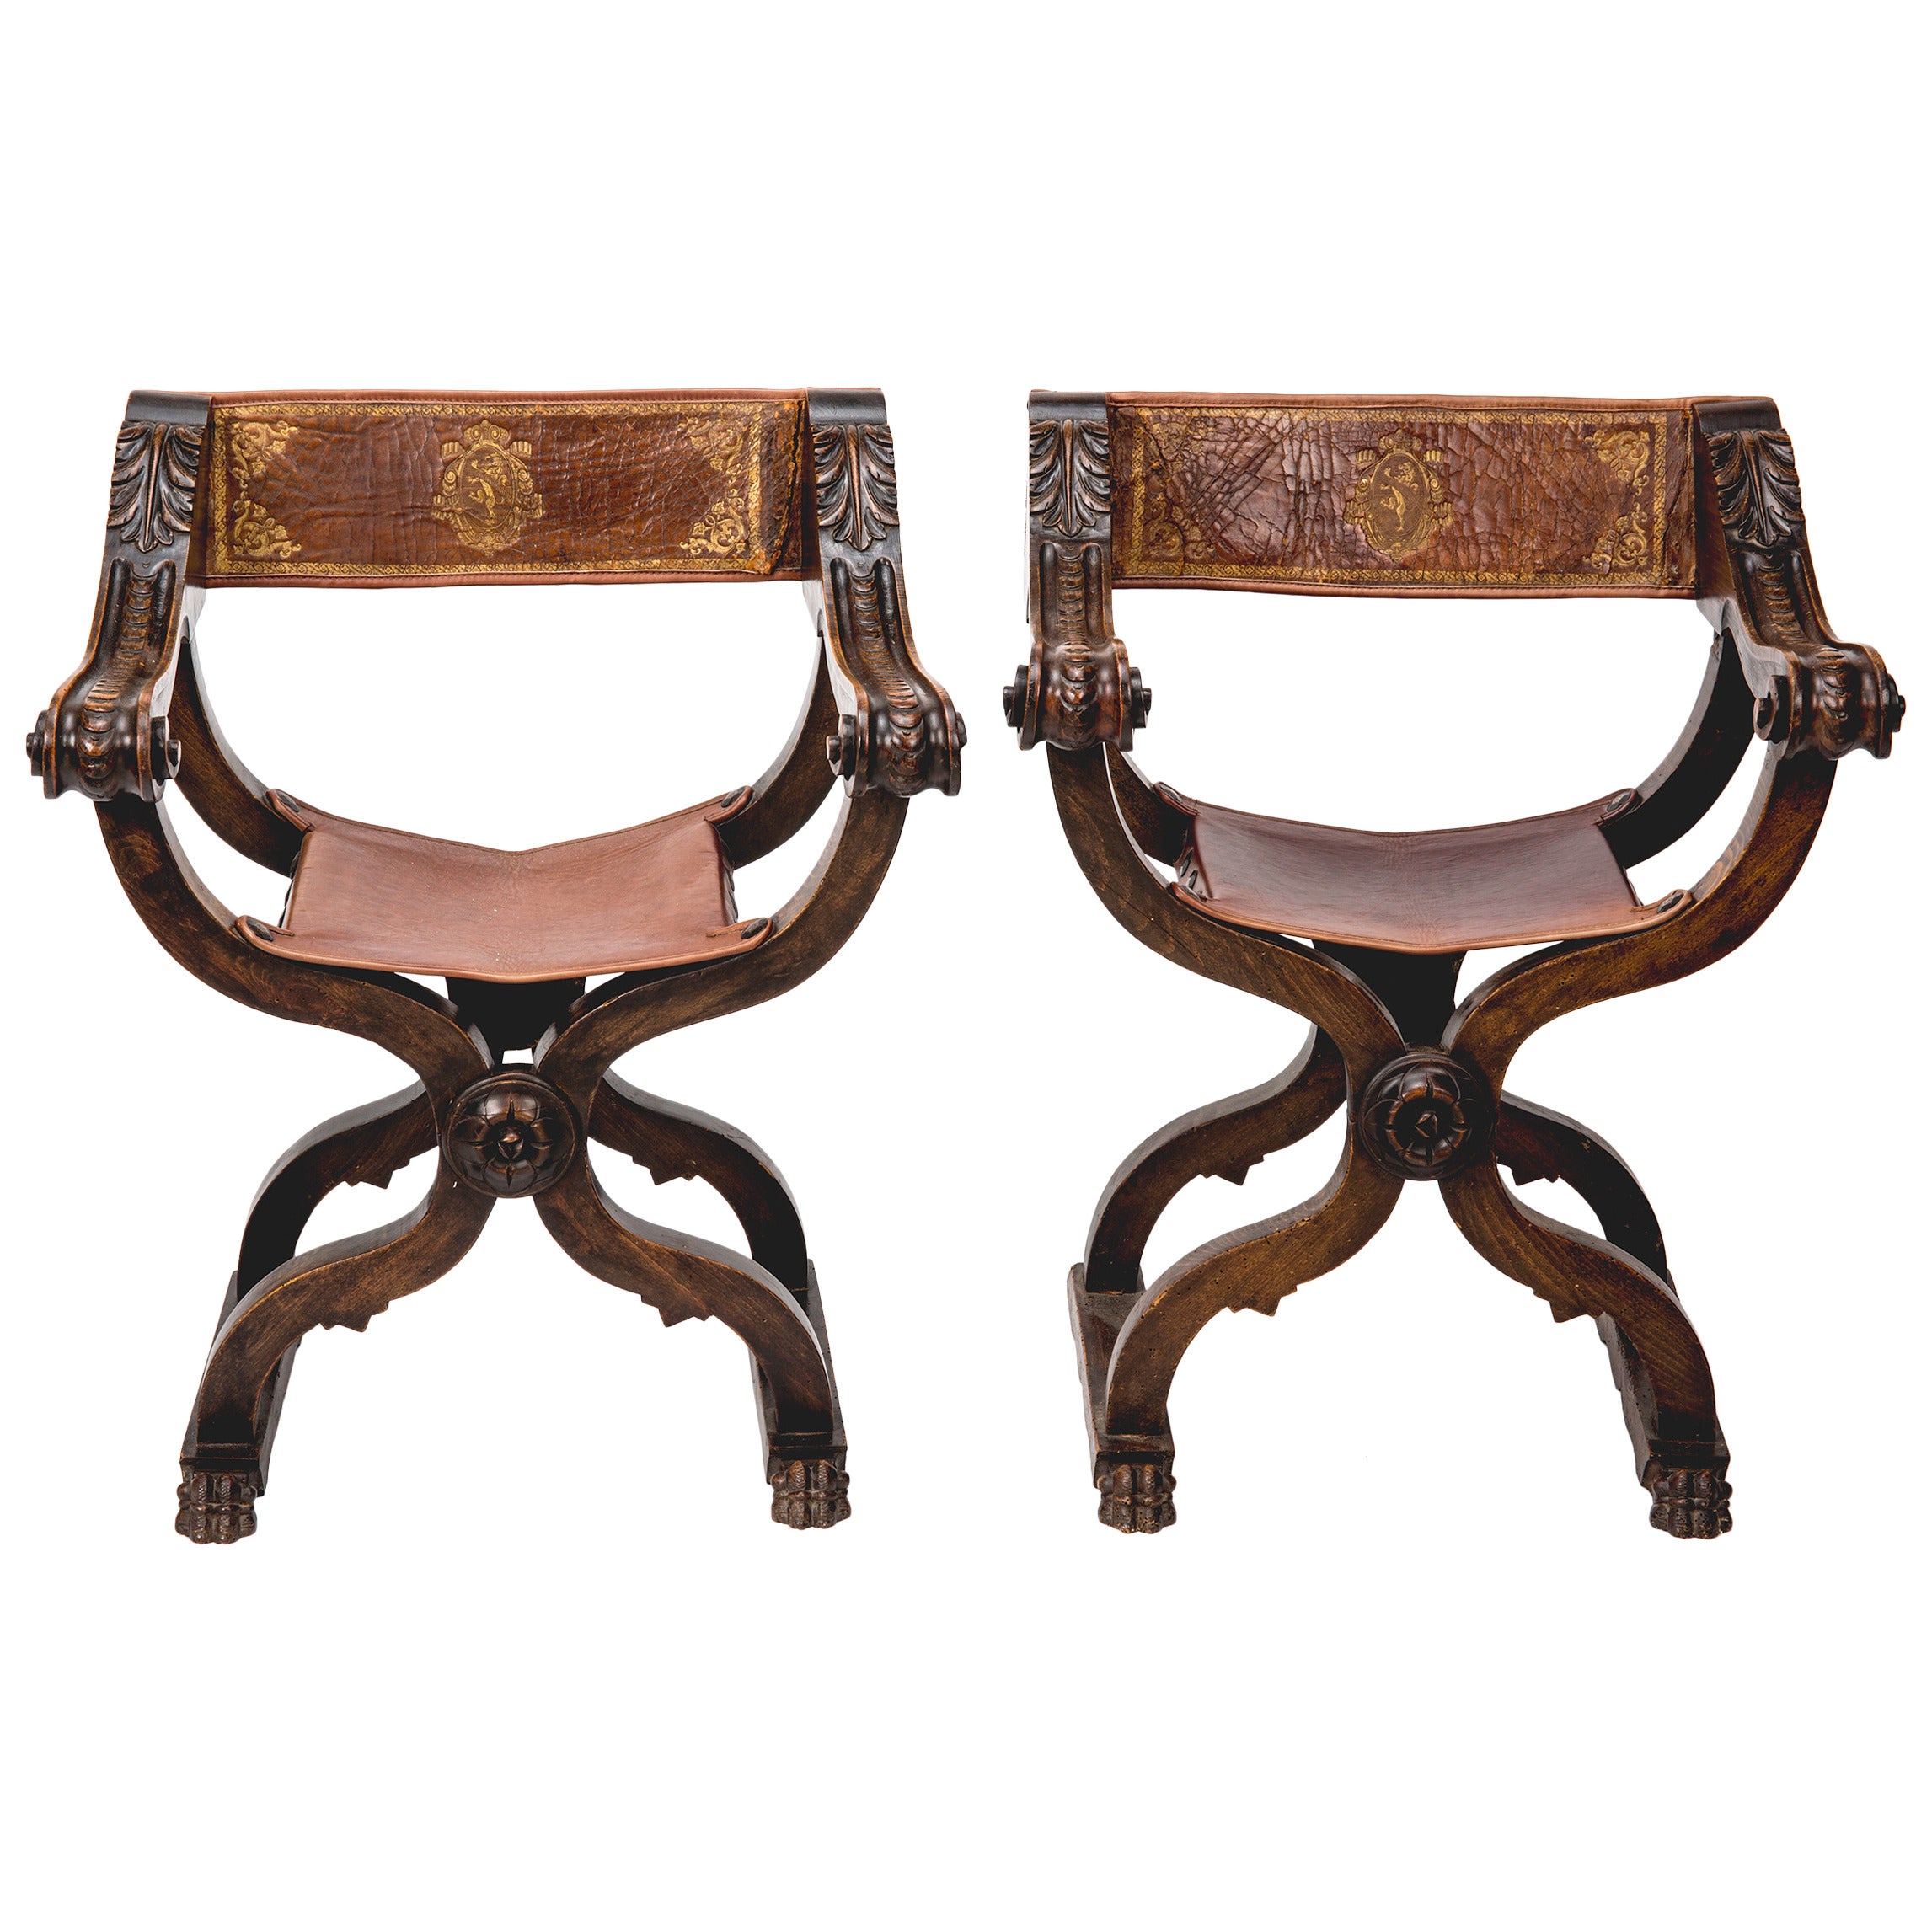 Pair of Savonarola Leather Chairs